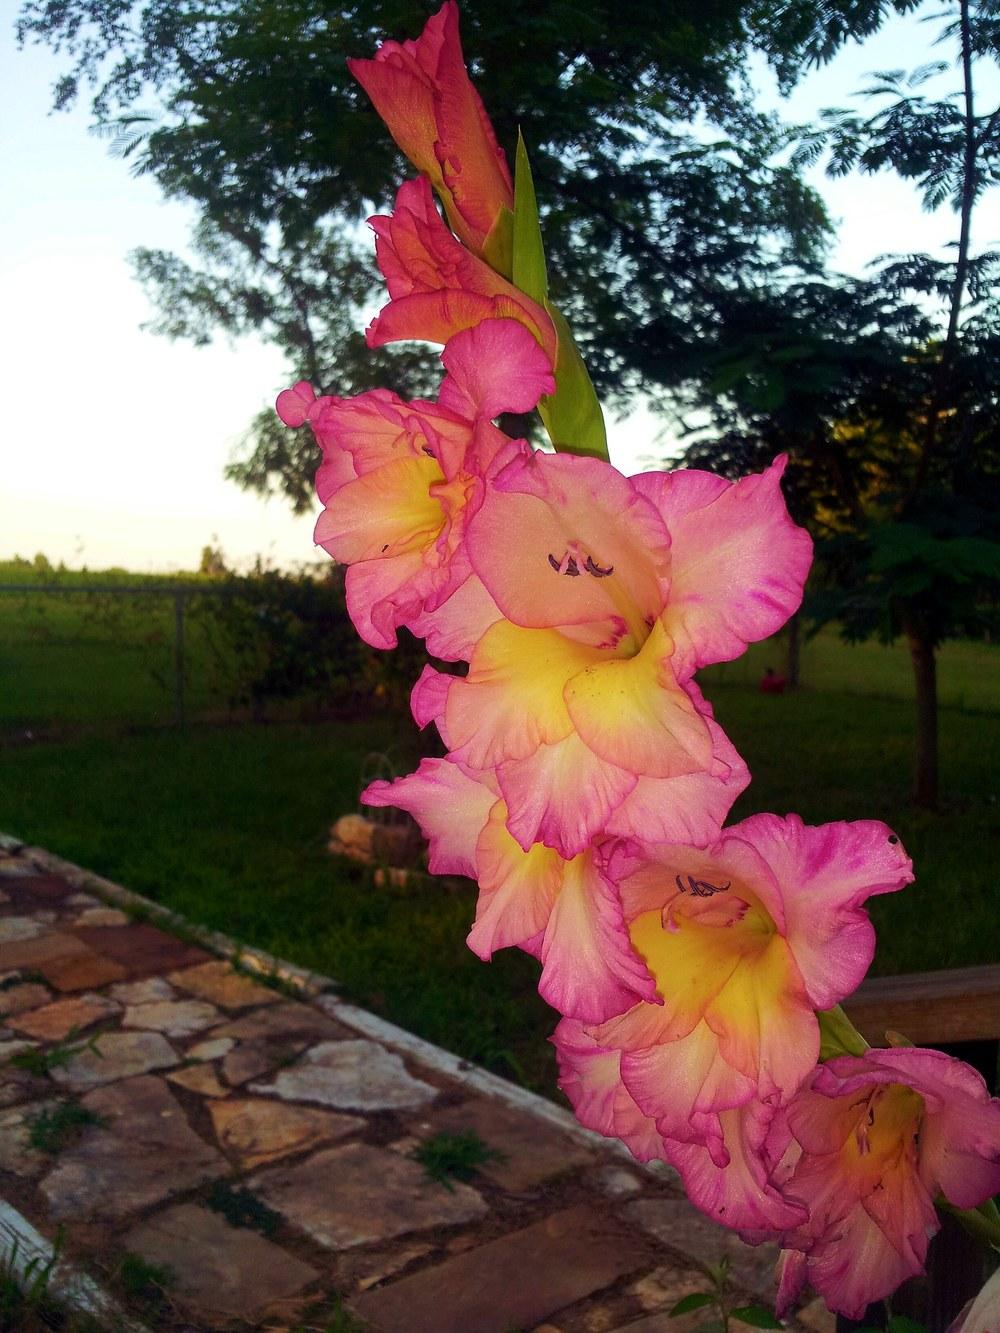 Photo of Gladiola (Gladiolus) uploaded by JamesAcclaims